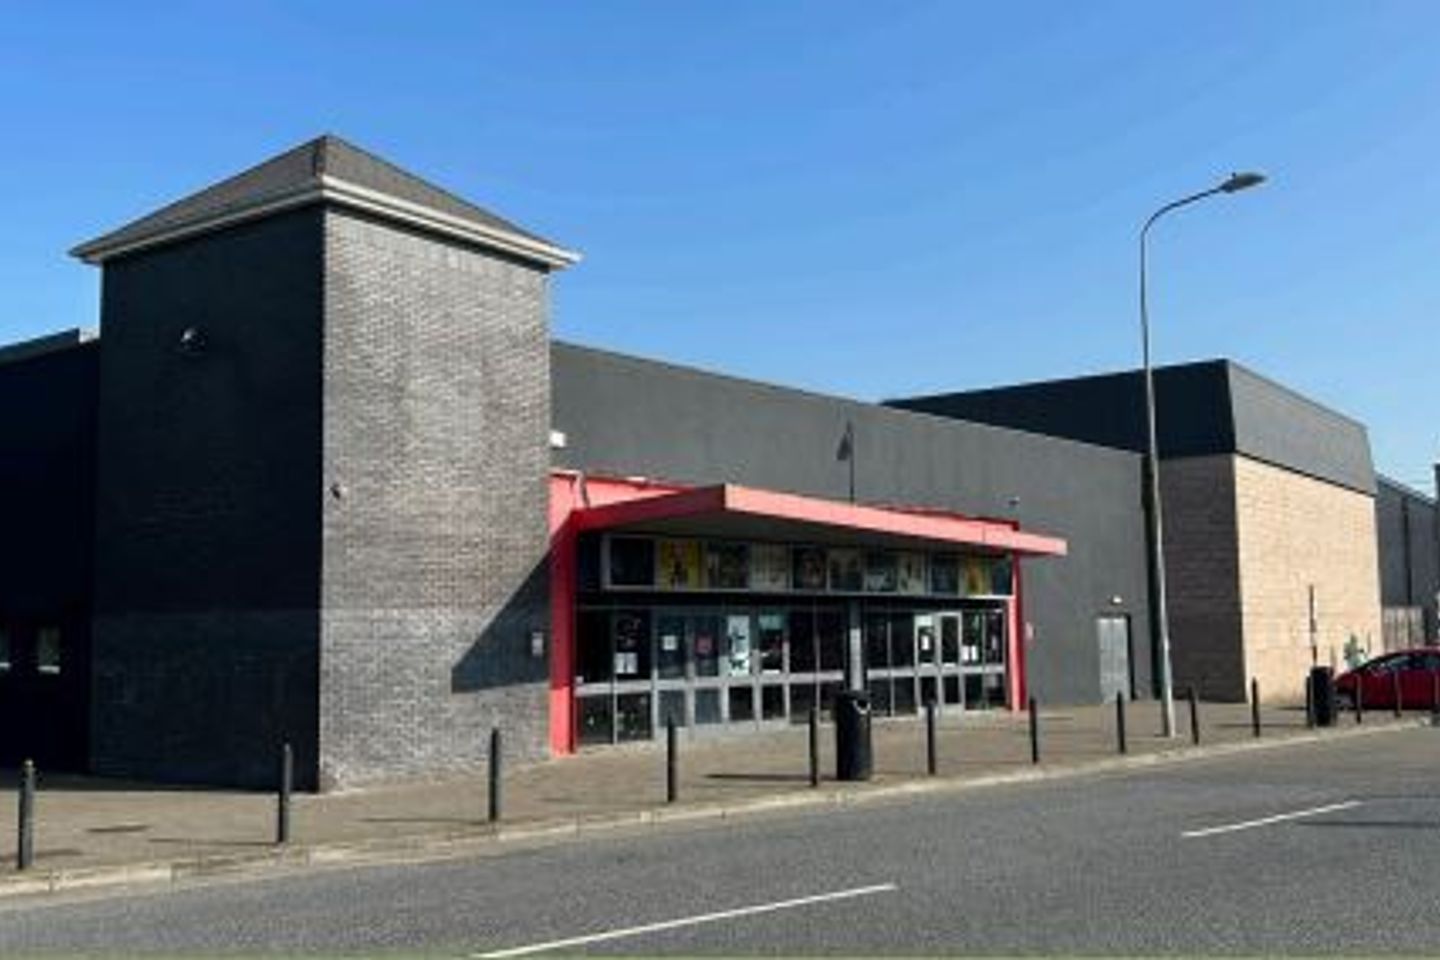 Former IMC Cinema, Goal Road, Kilkenny, Co. Kilkenny